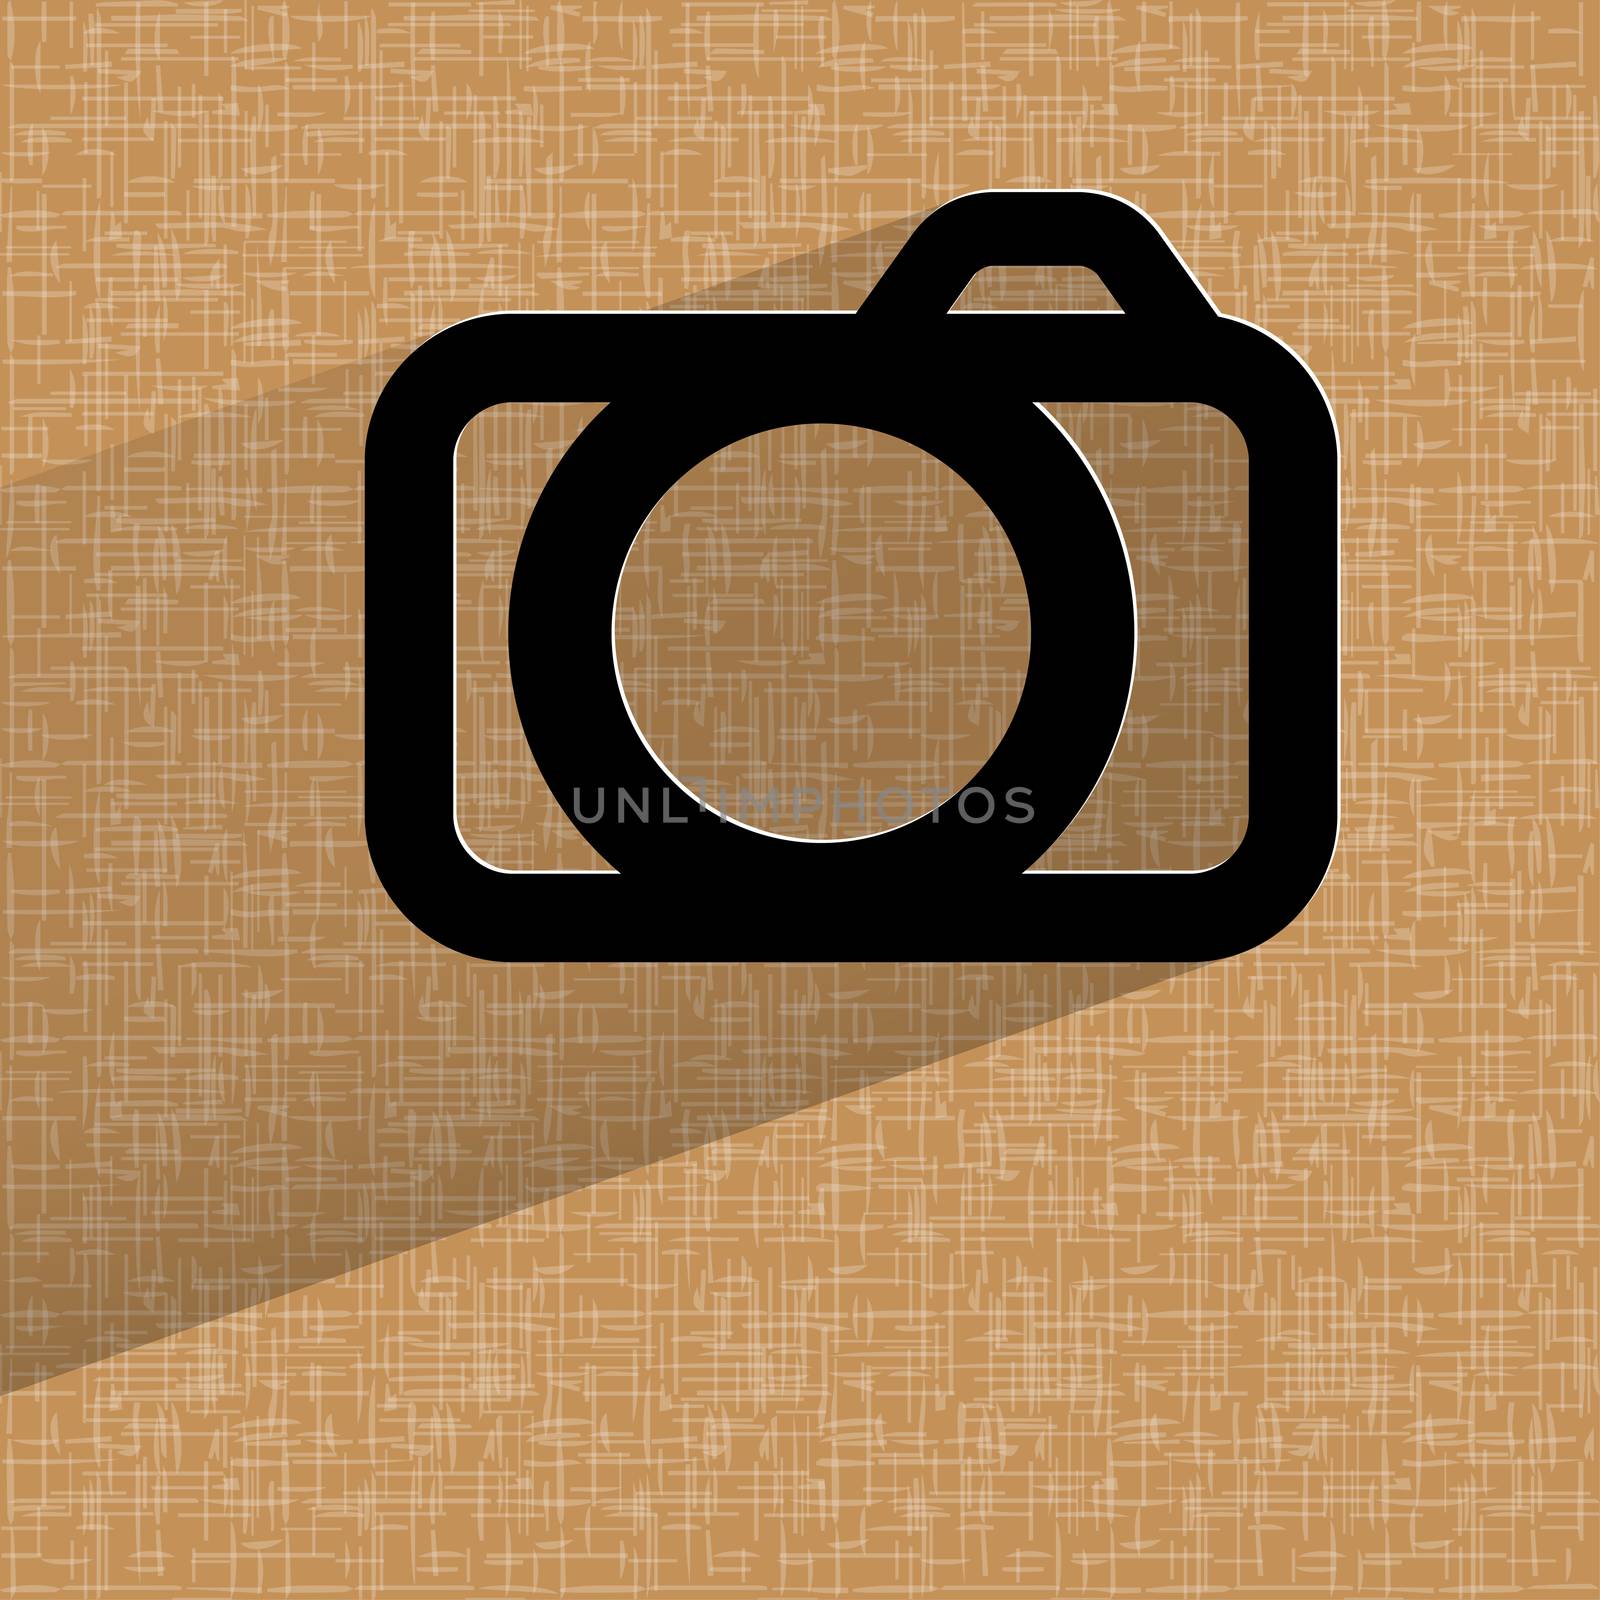 Camera. Flat modern web design on a flat geometric abstract background . 